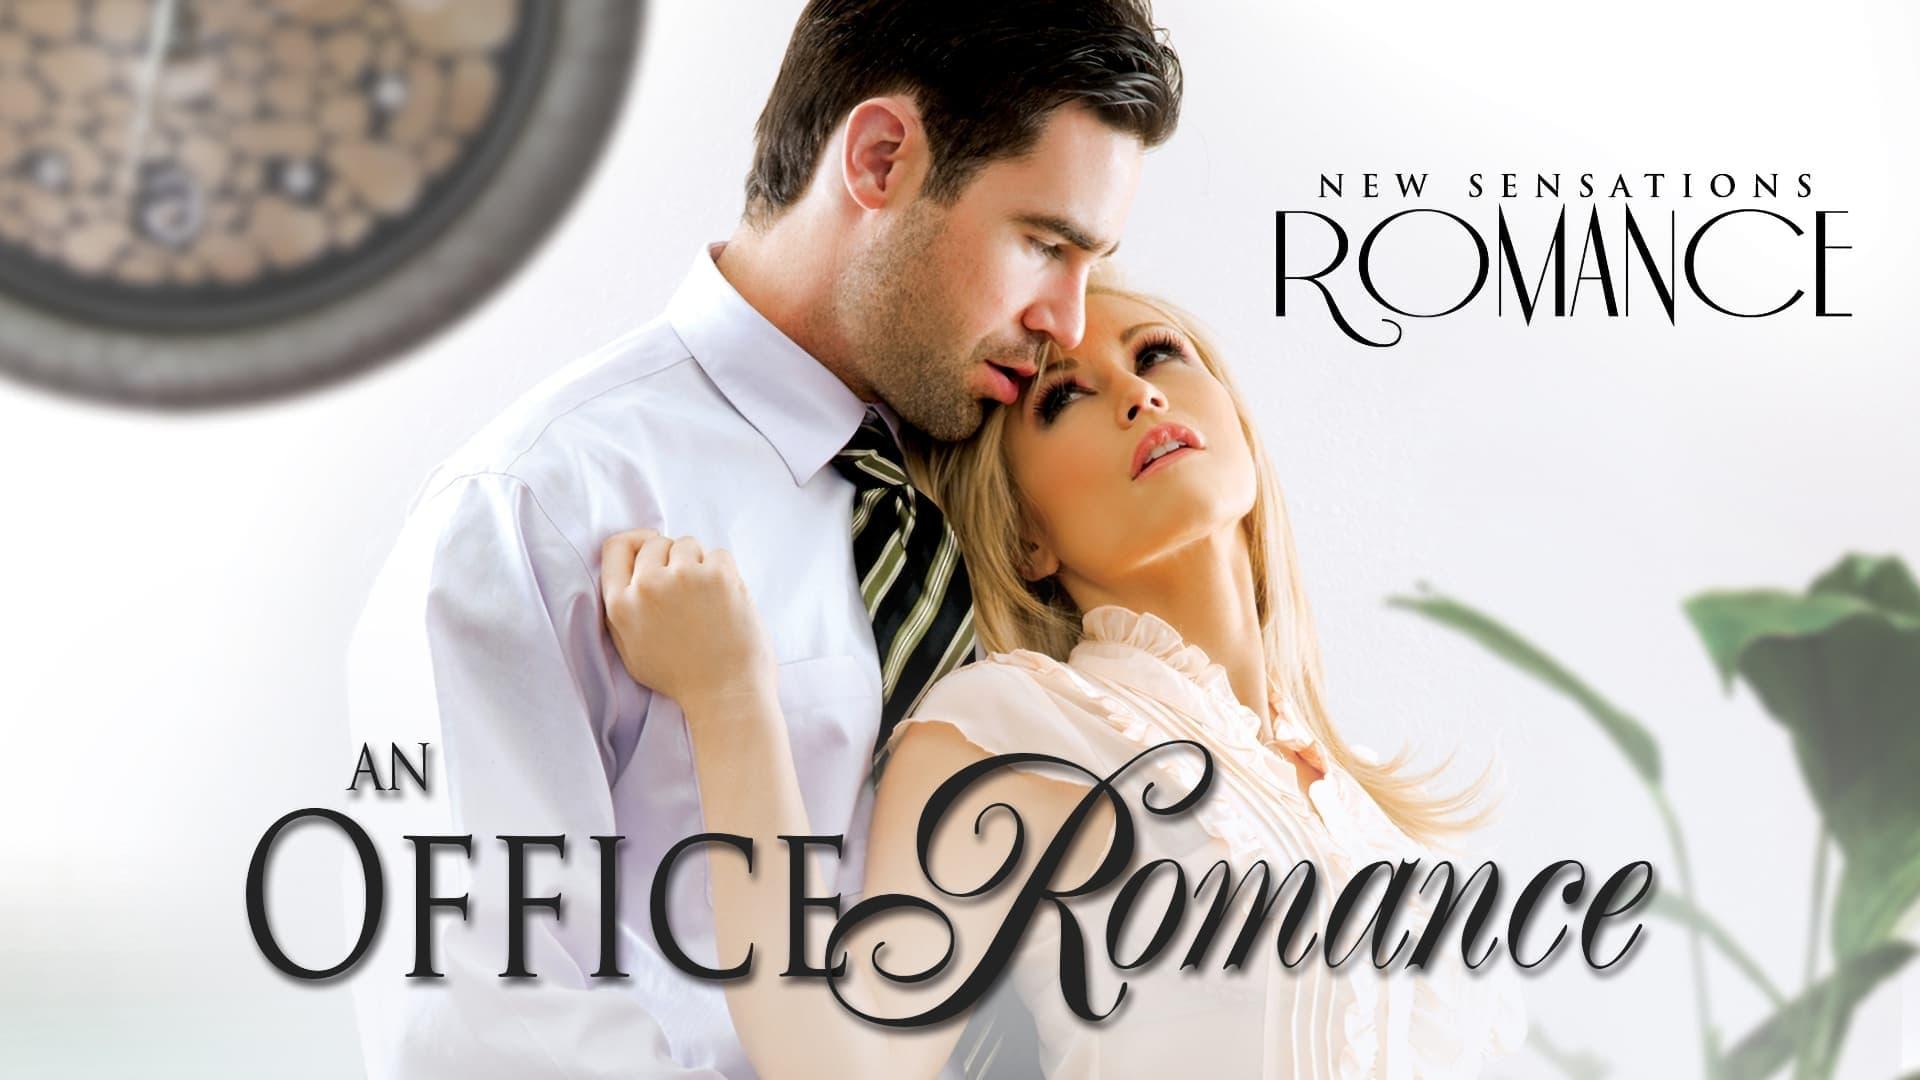 An Office Romance backdrop